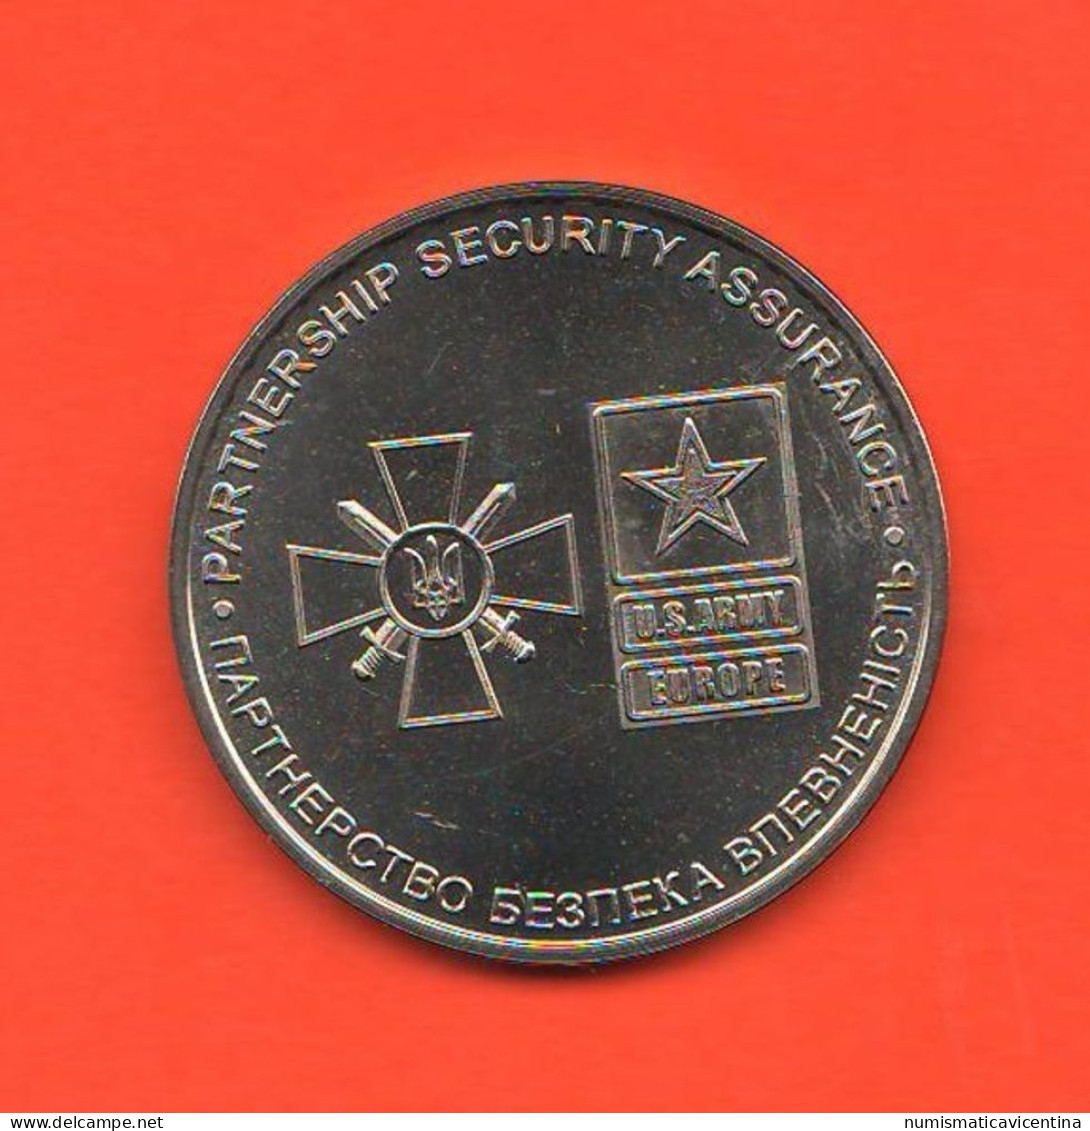 Saber Guardian Rapid Trident 2015 Ukraina Ucraine America Partnership Security Assurance Medal Medaille - Profesionales/De Sociedad